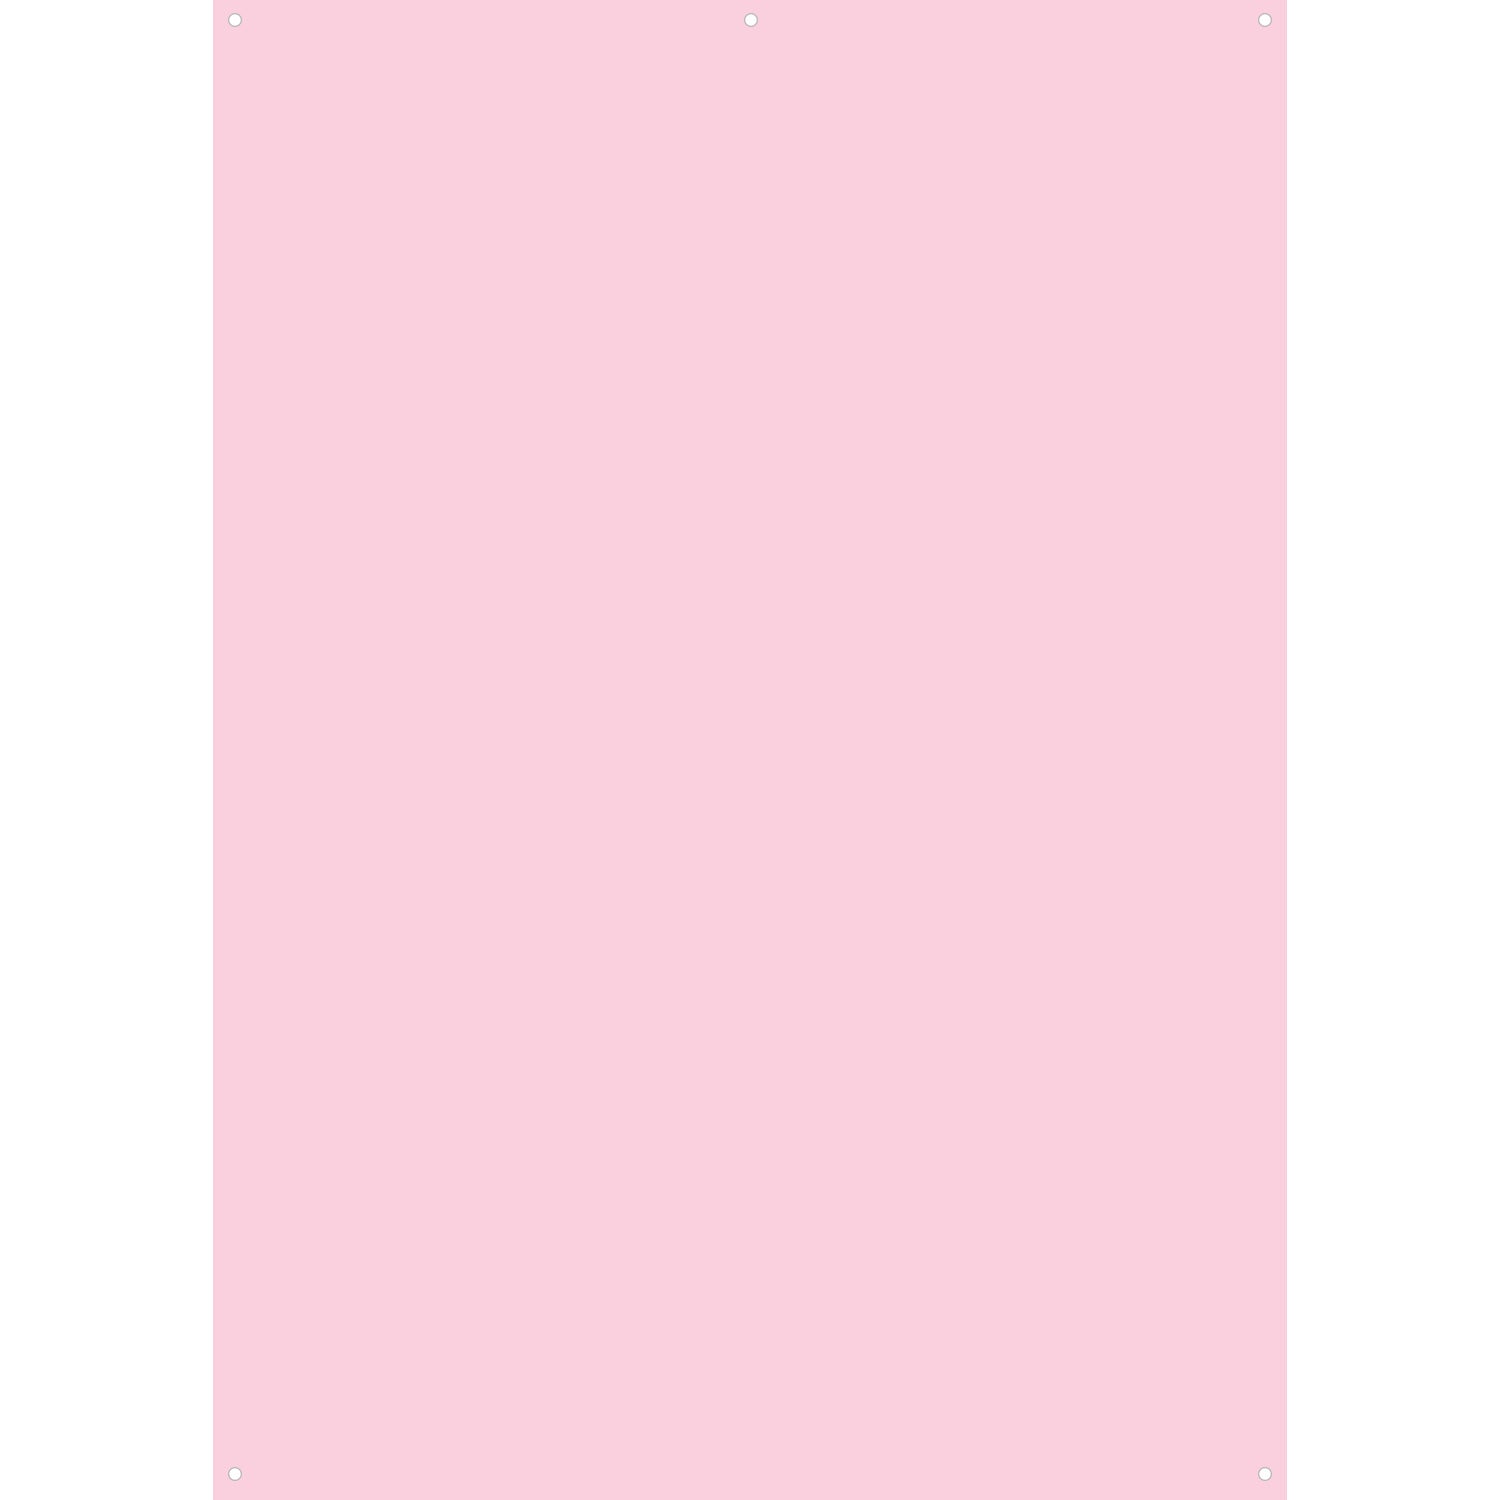 X-Drop Canvas Backdrop – Pink Solid Color (5' x 7')